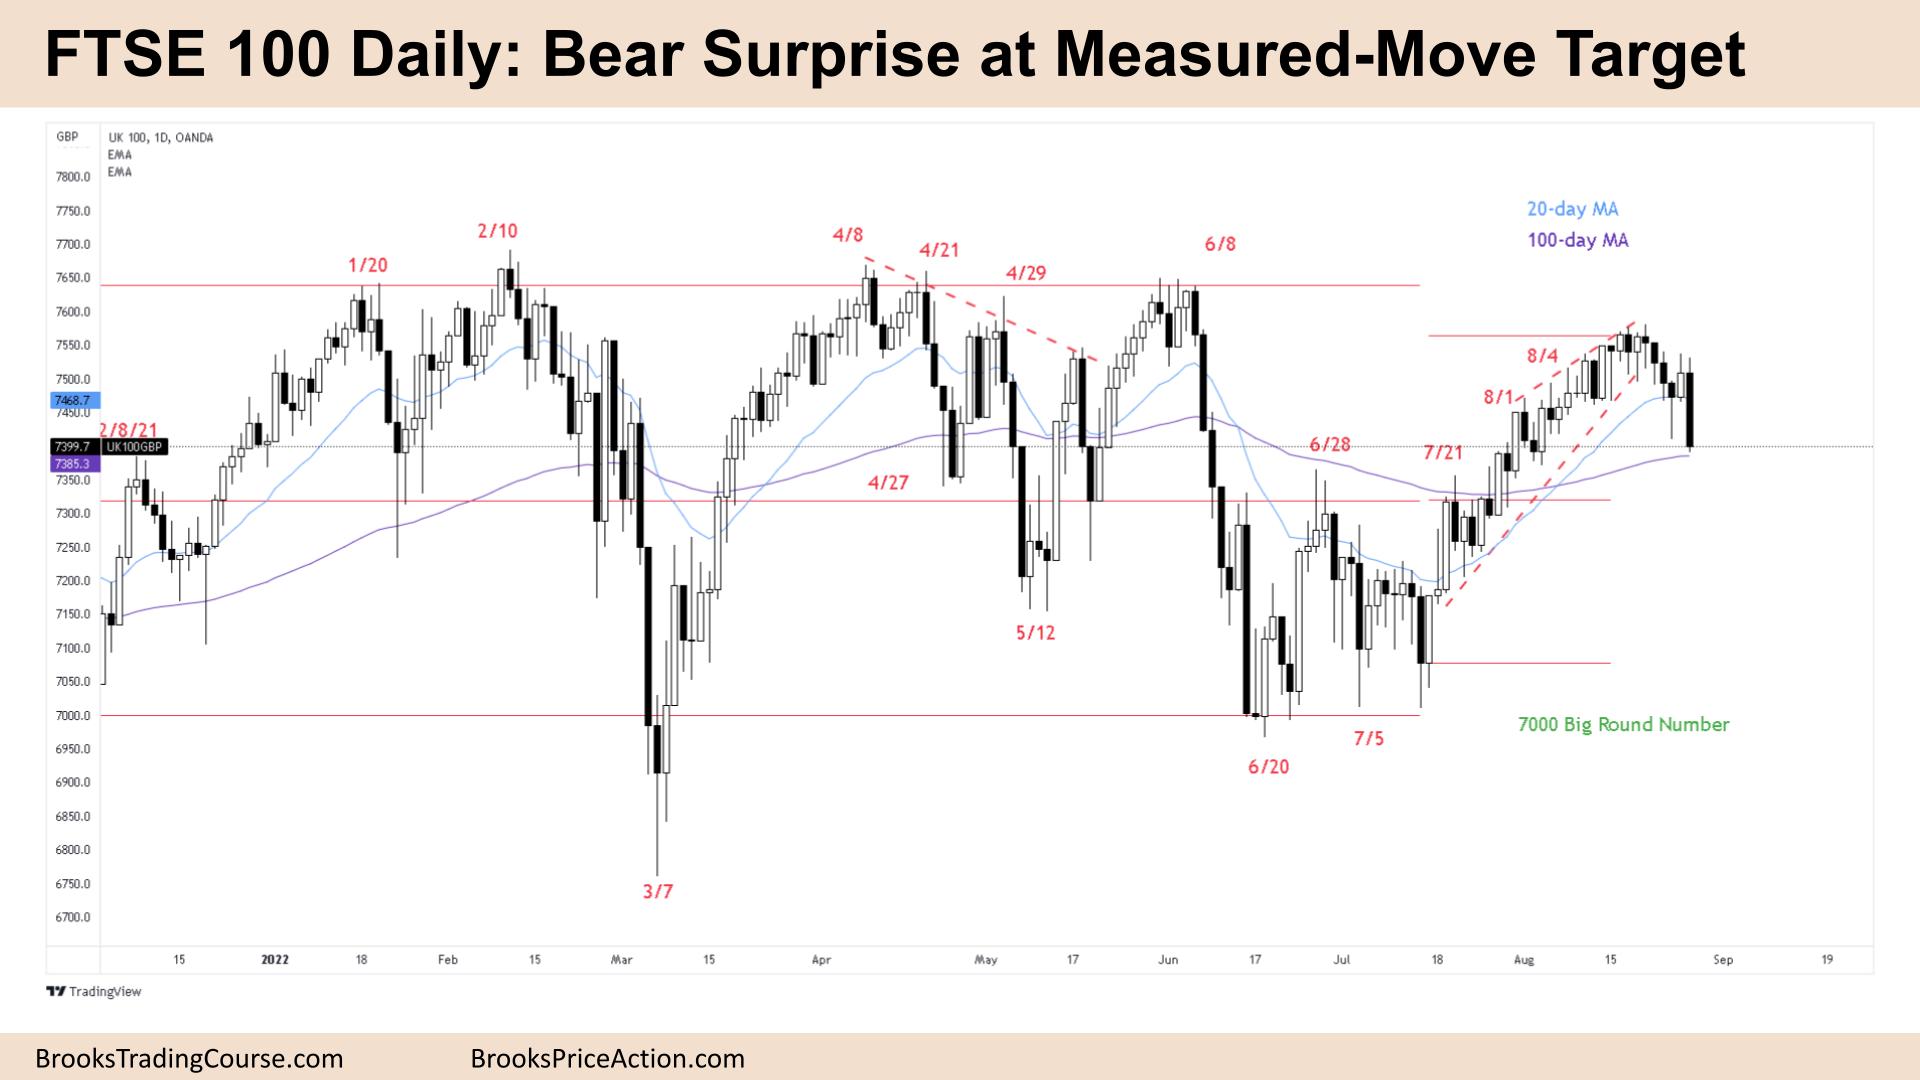 FTSE 100 Bear Surprise at Measured-Move Target